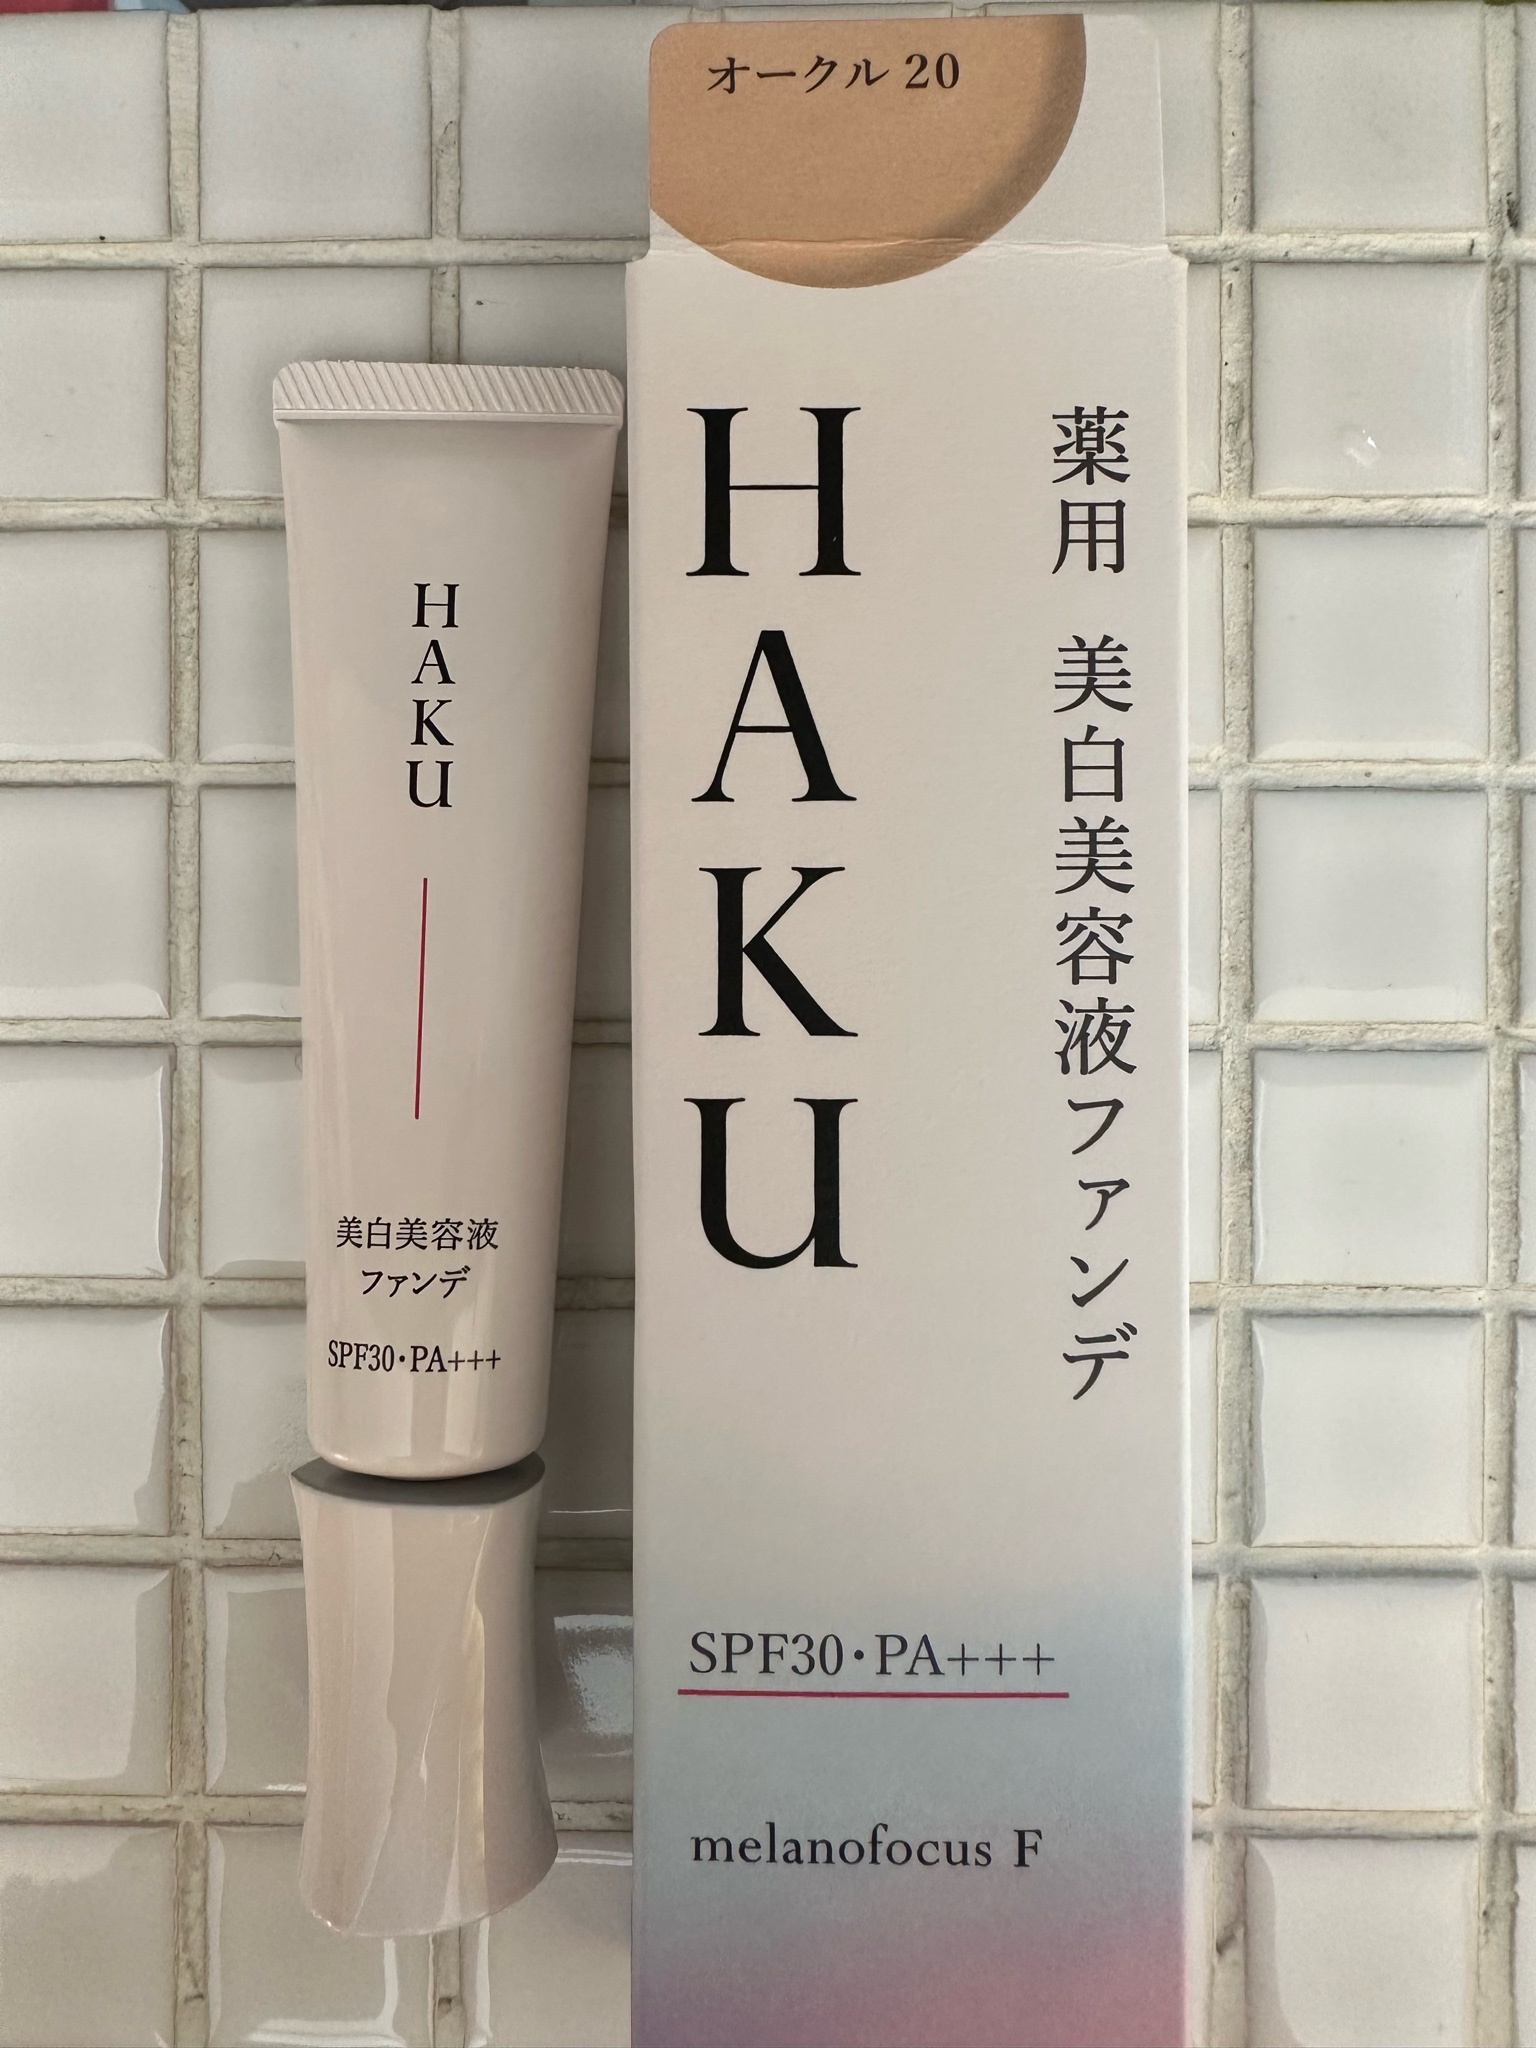 HAKU / 薬用 美白美容液ファンデ オークル20の公式商品情報